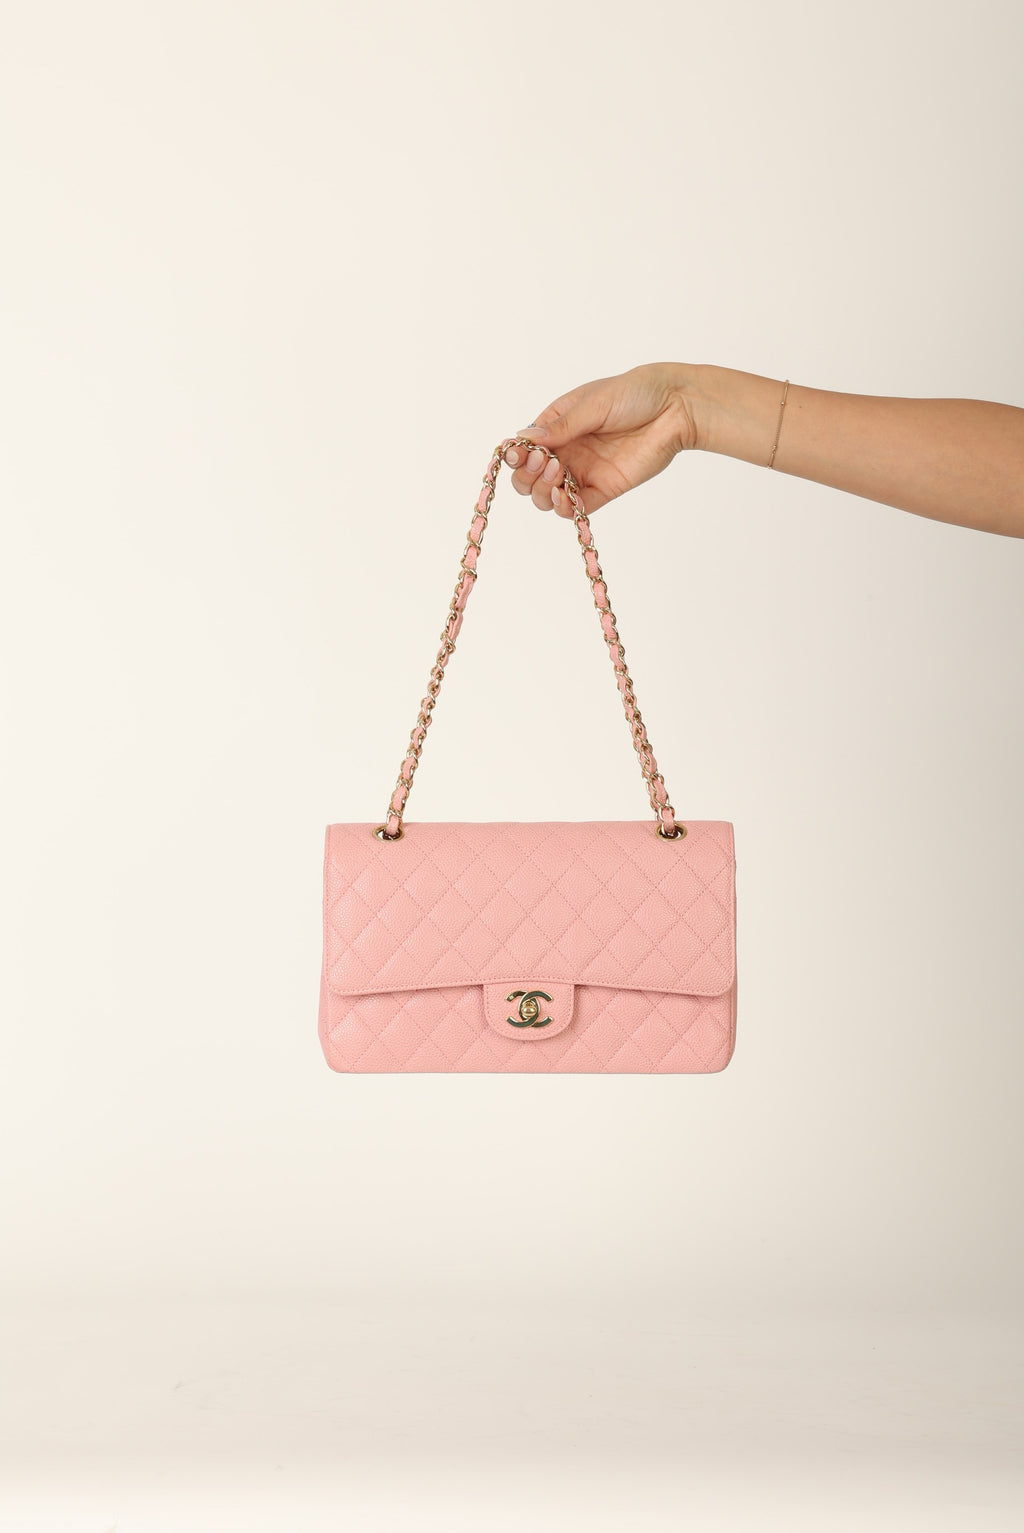 The Chanel Kelly Bag is back for 2023 - Handbag Angels